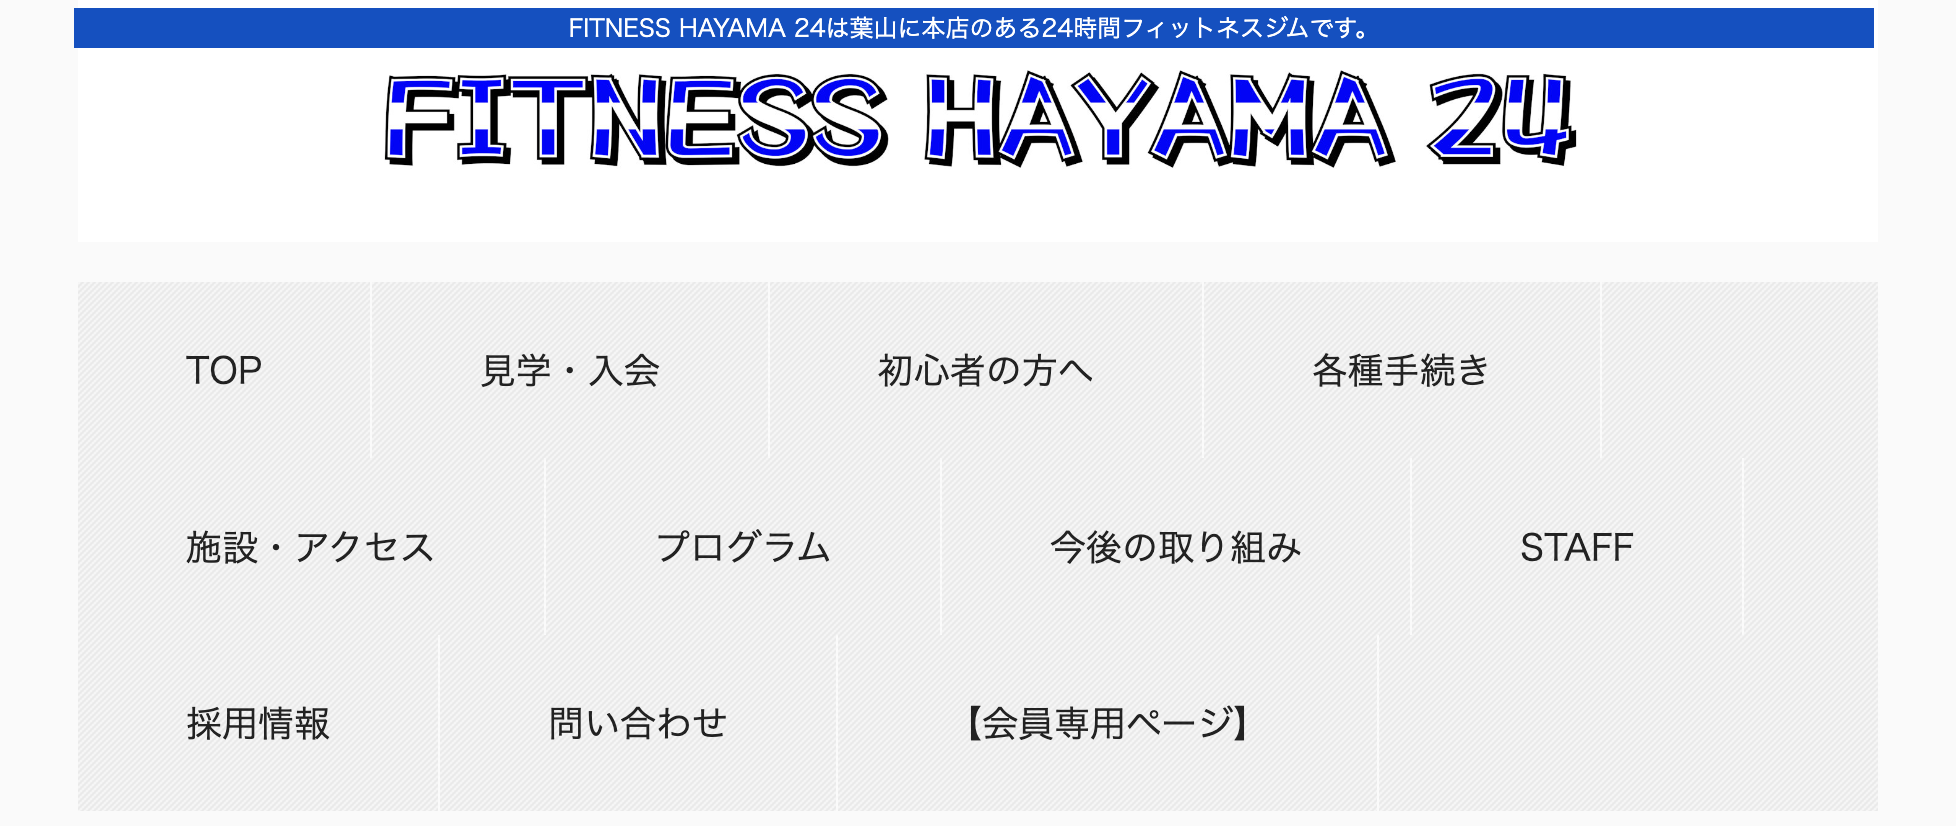 FITNESS HAYAMA 24